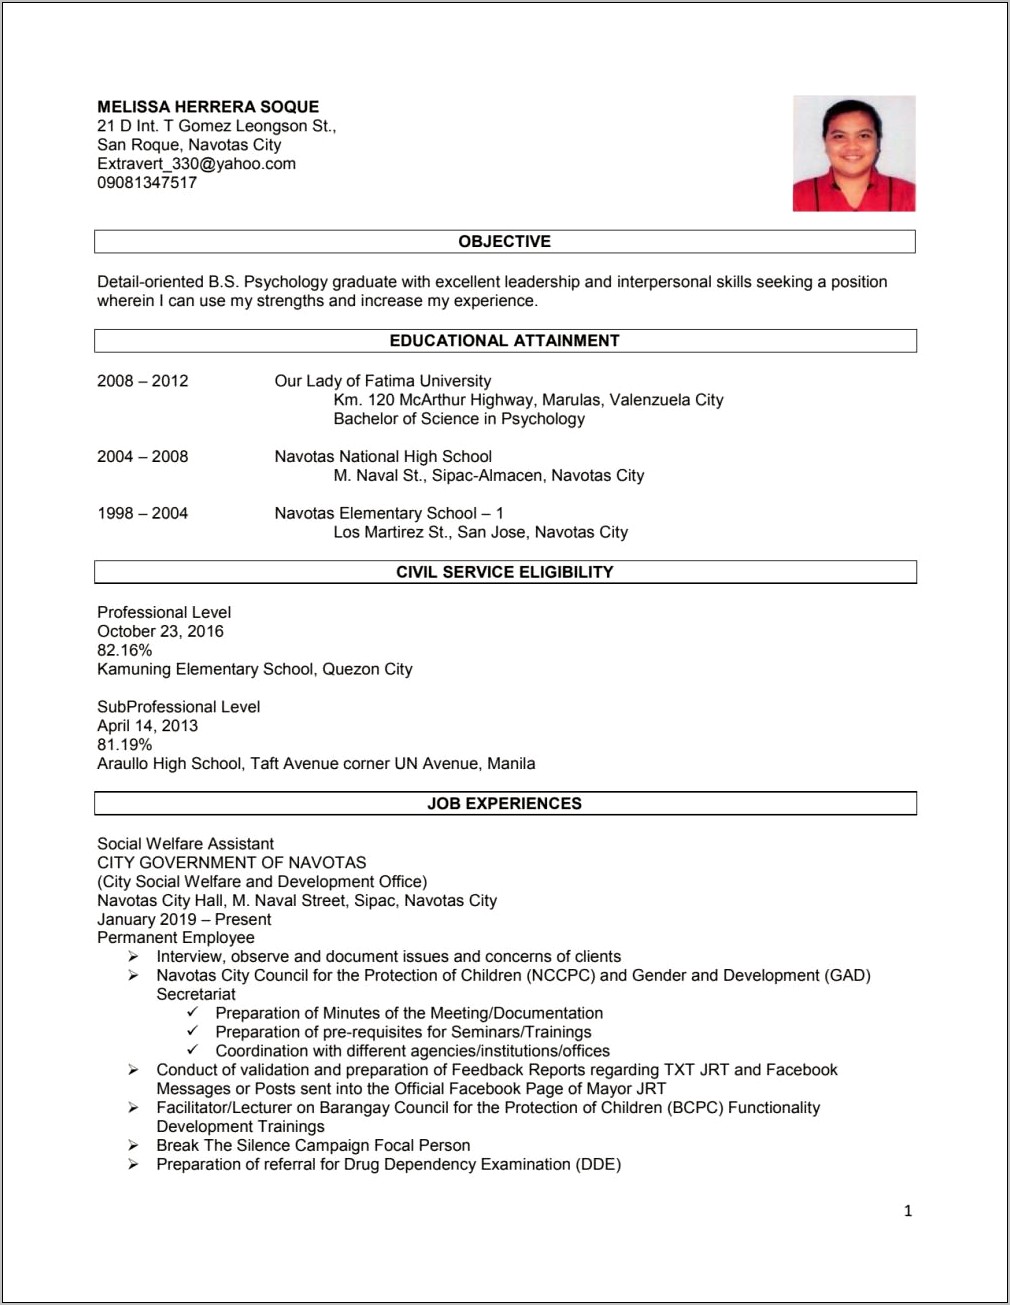 Resume For A Civil Service Job